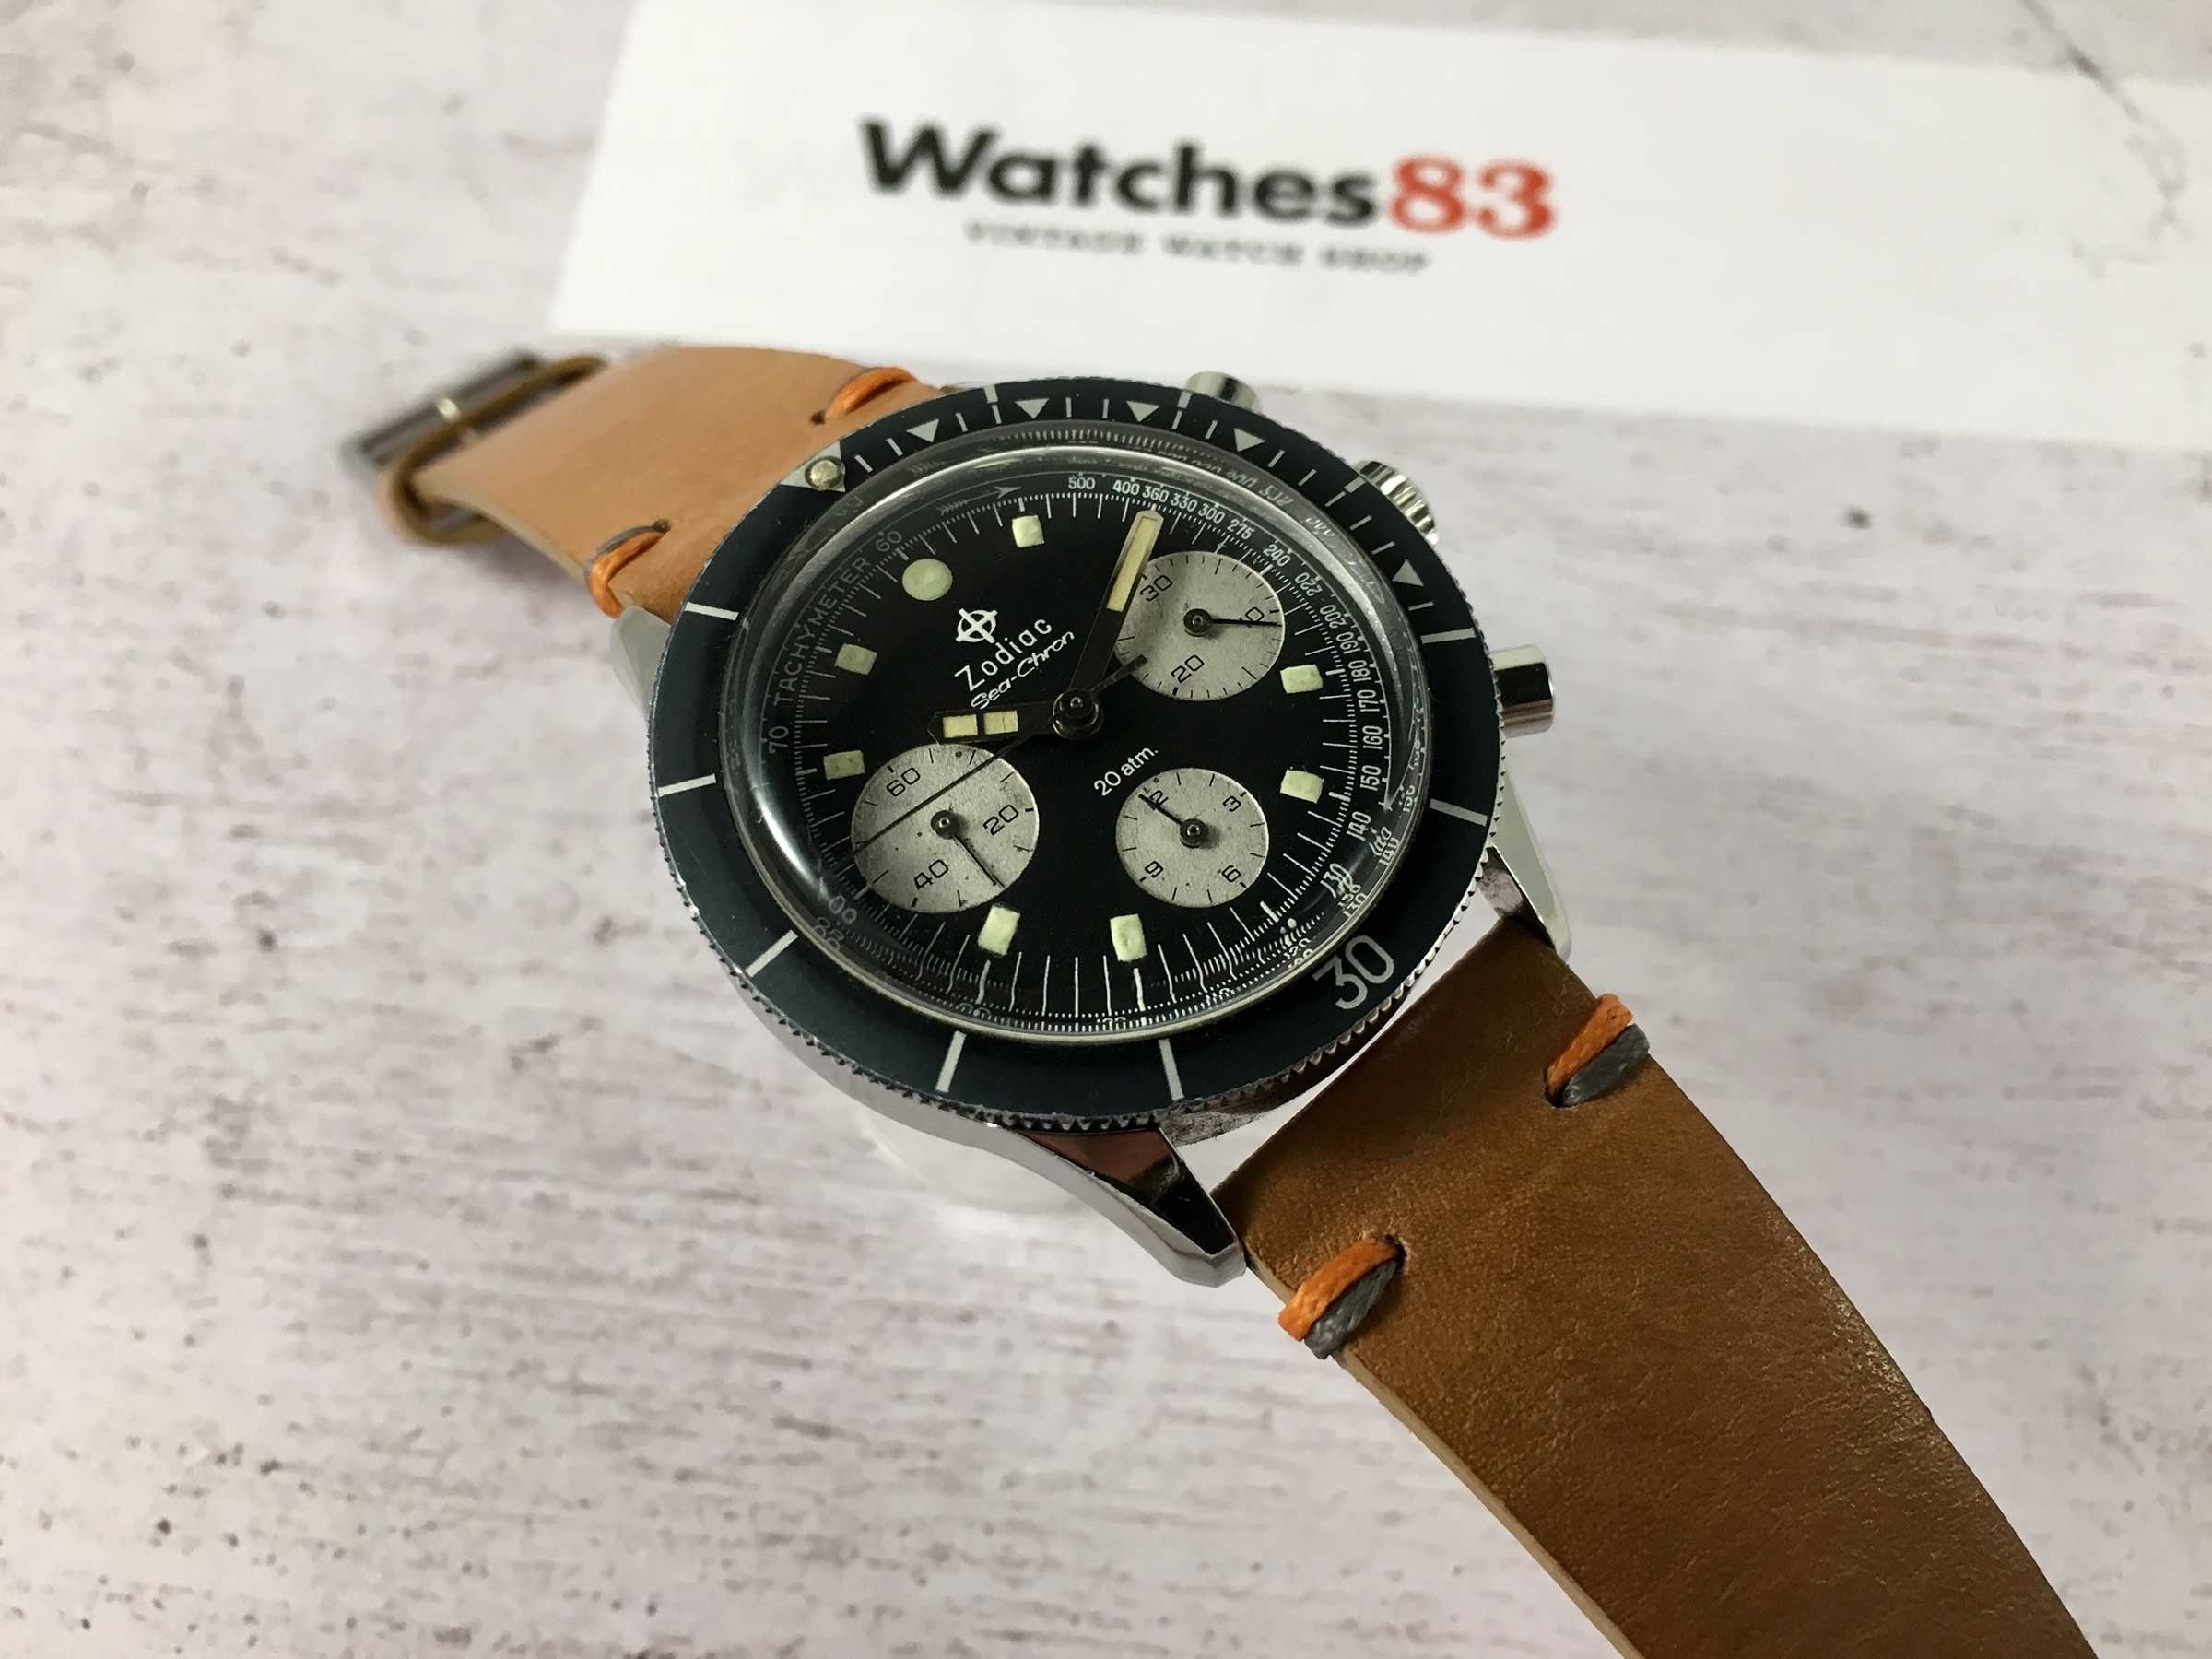 Zodiac Men's Sea-Chron Automatic Watch